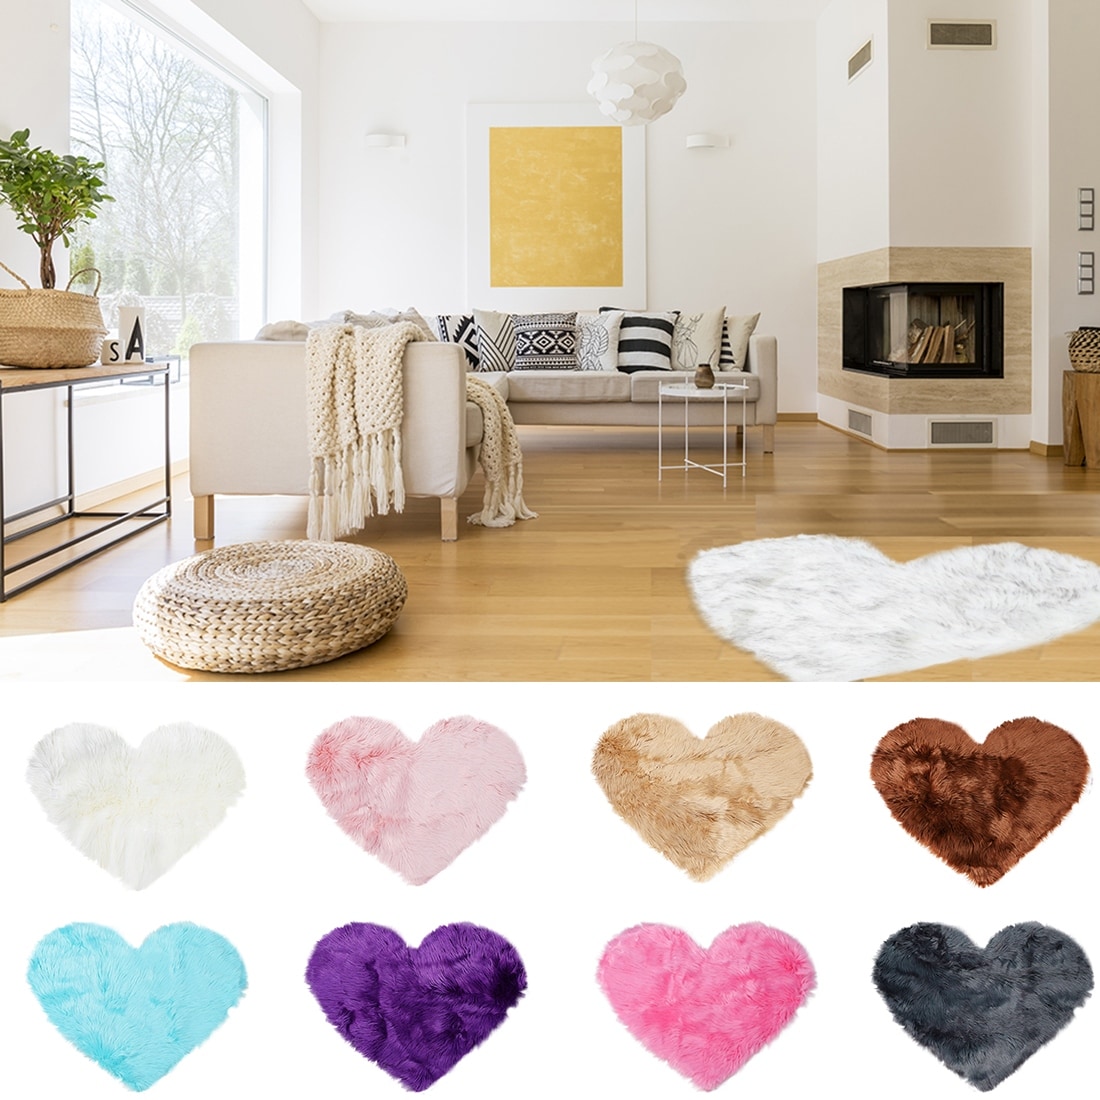 https://ak1.ostkcdn.com/images/products/is/images/direct/9c83e53f9ef0d0af2c13573676c81026e16121ae/Area-Rugs-for-Home-Living-Room-Sofa-Floor-Mat-Bedroom-2.3ftx3ft.jpg